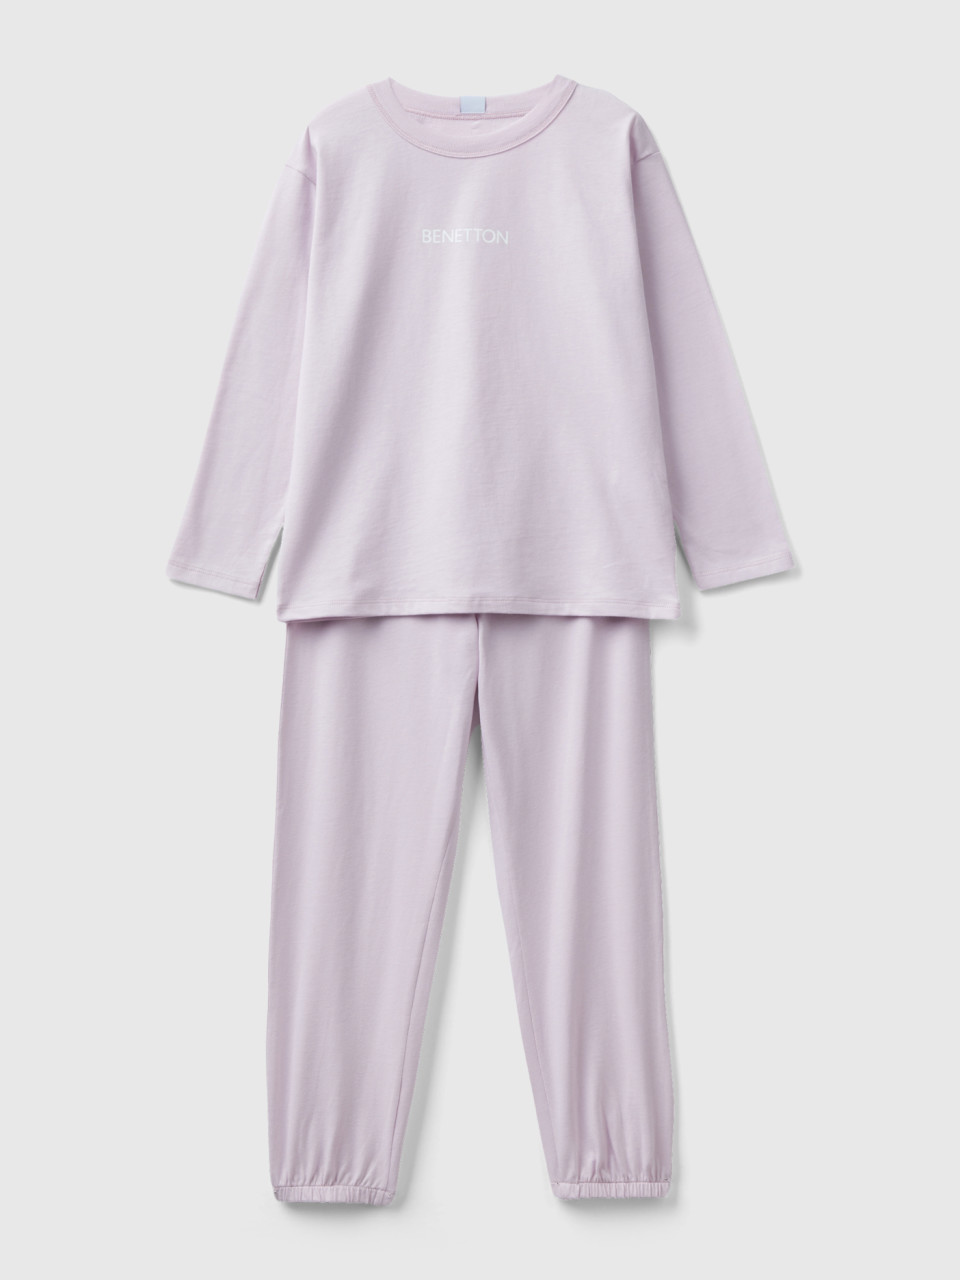 Benetton, Pyjamas In 100% Cotton With Logo, Lilac, Kids